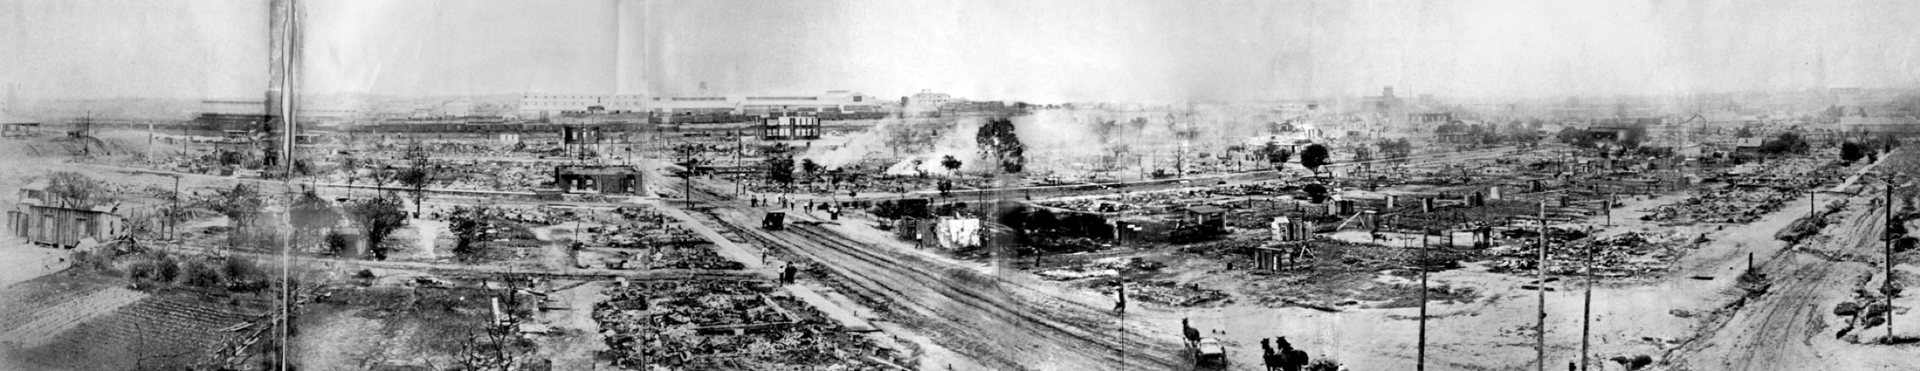 Tulsa Race Massacare Panorama of the ruined area tulsa race riots restoration